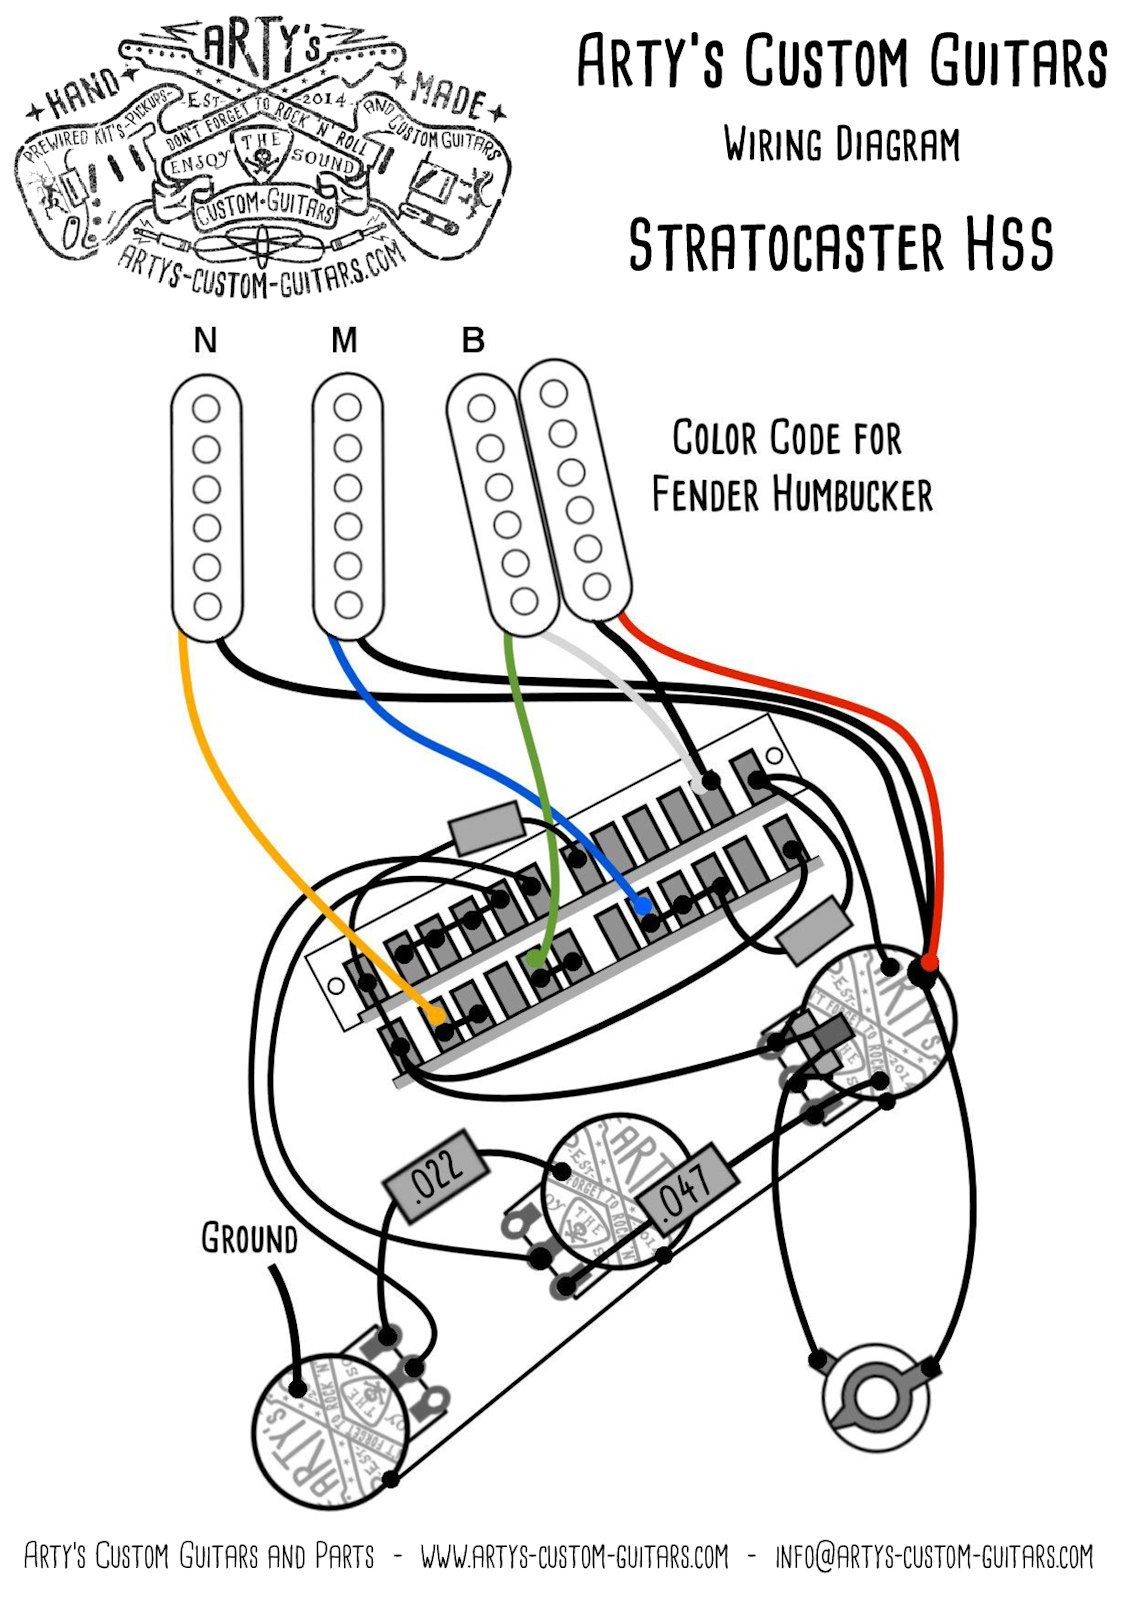 vintage strat wiring diagram super switch wiring diagram show arty s custom guitars hss super switch vintage